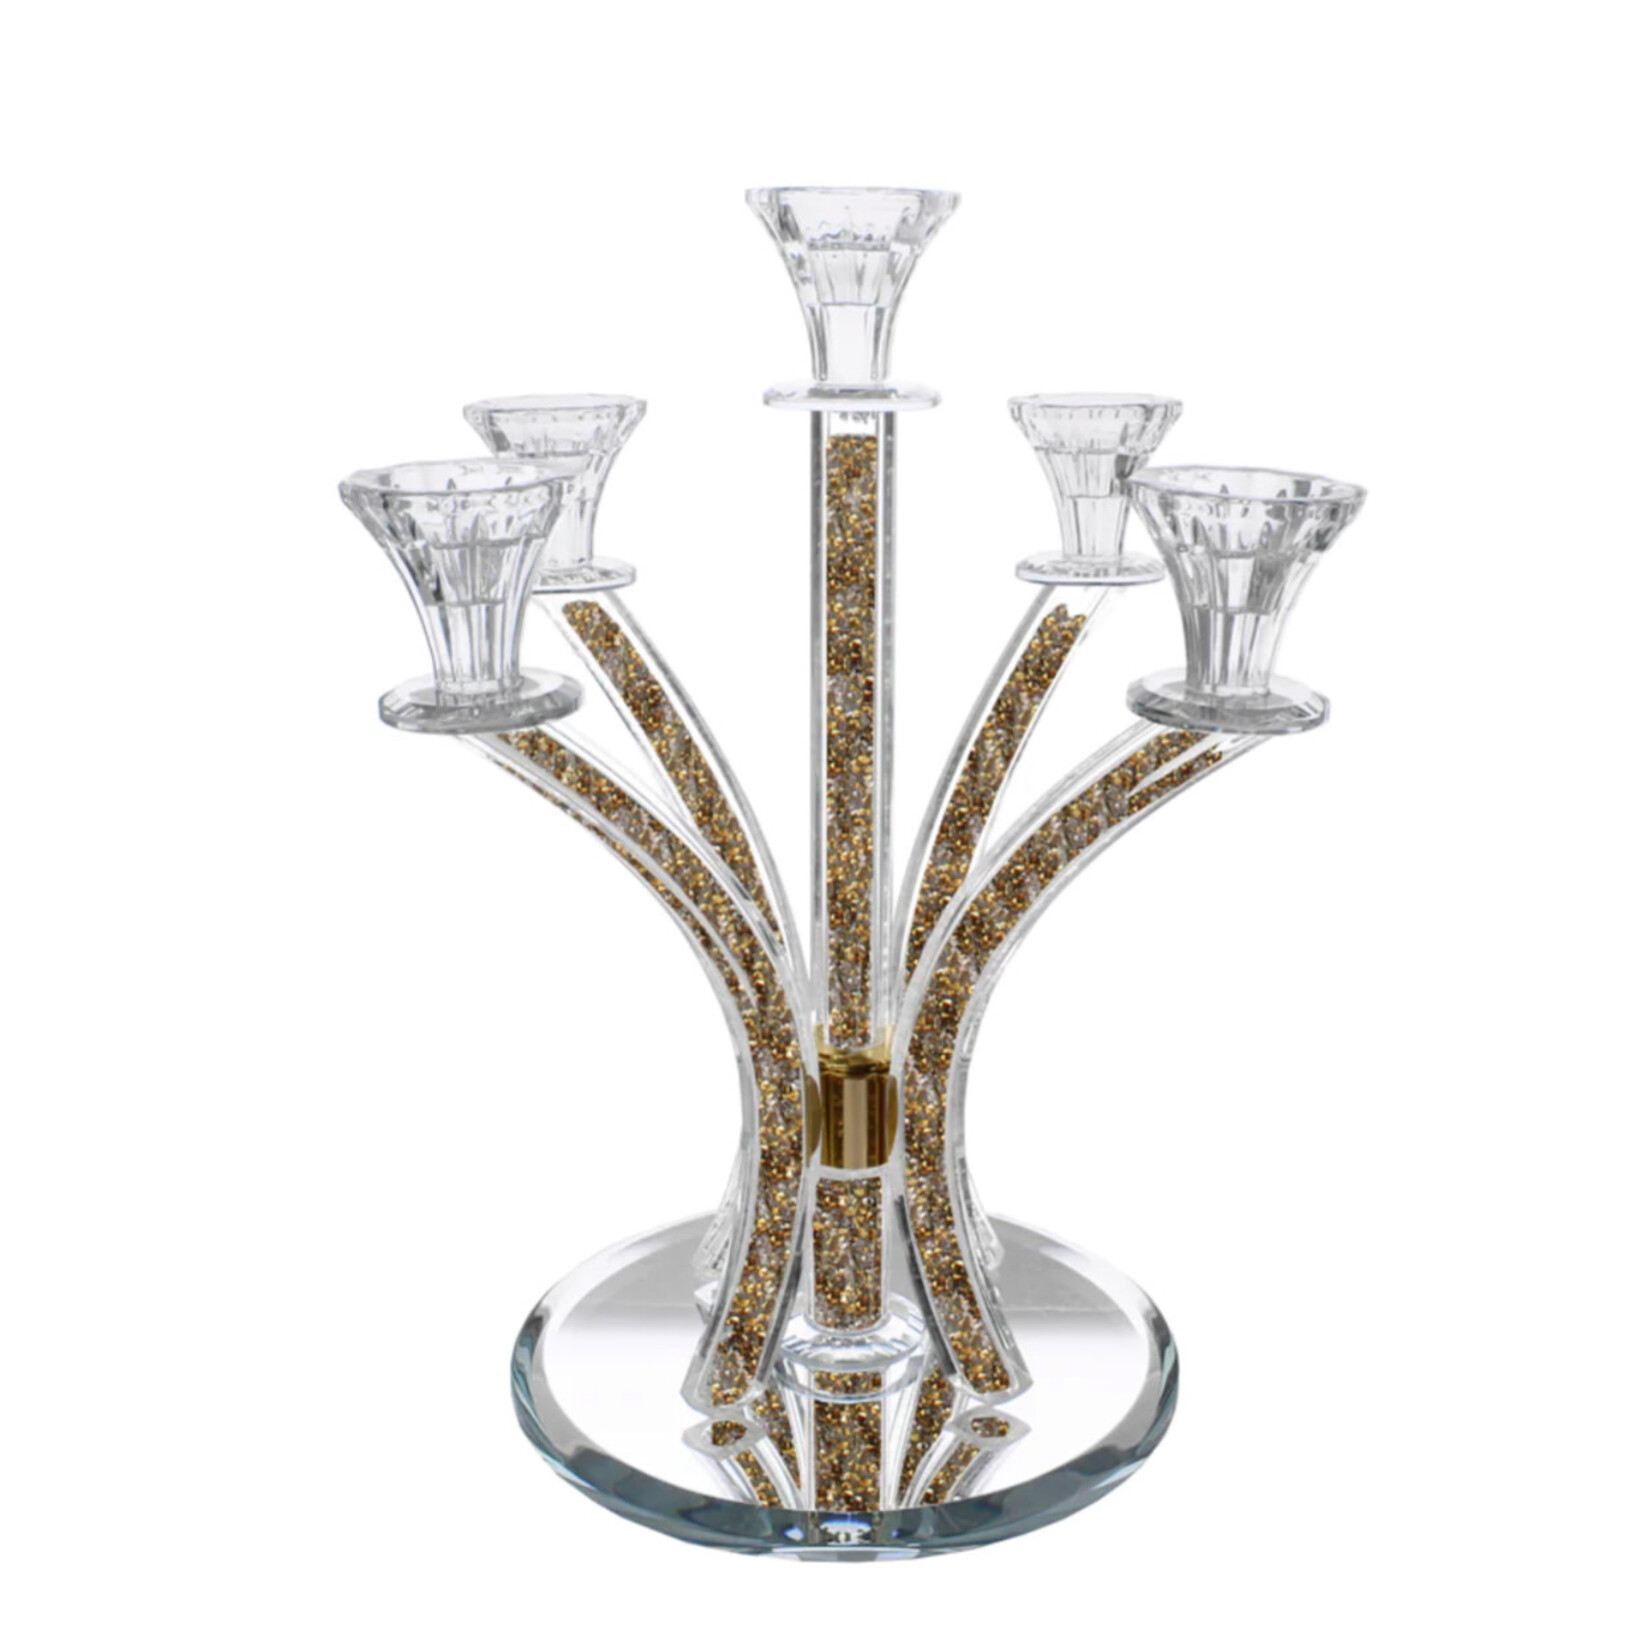 Crystal Candelabra Round Design - 5 Arm with Inner Gemstones - Gold/Silver